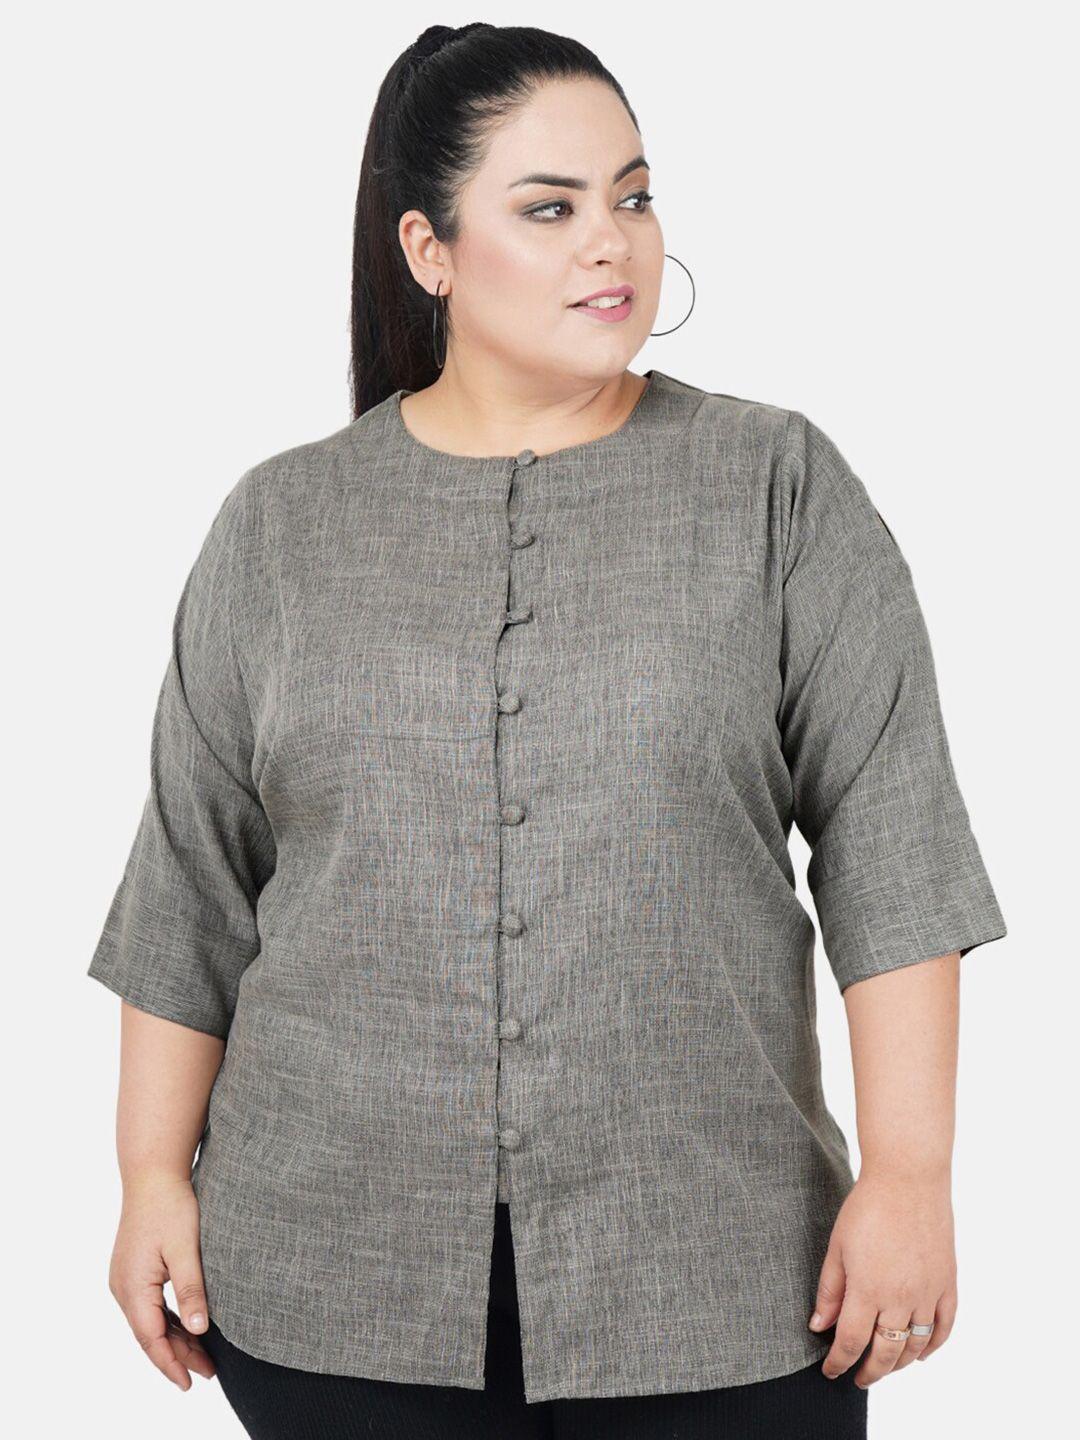 Indietoga Plus Size Grey Cotton Linen Tunic Top